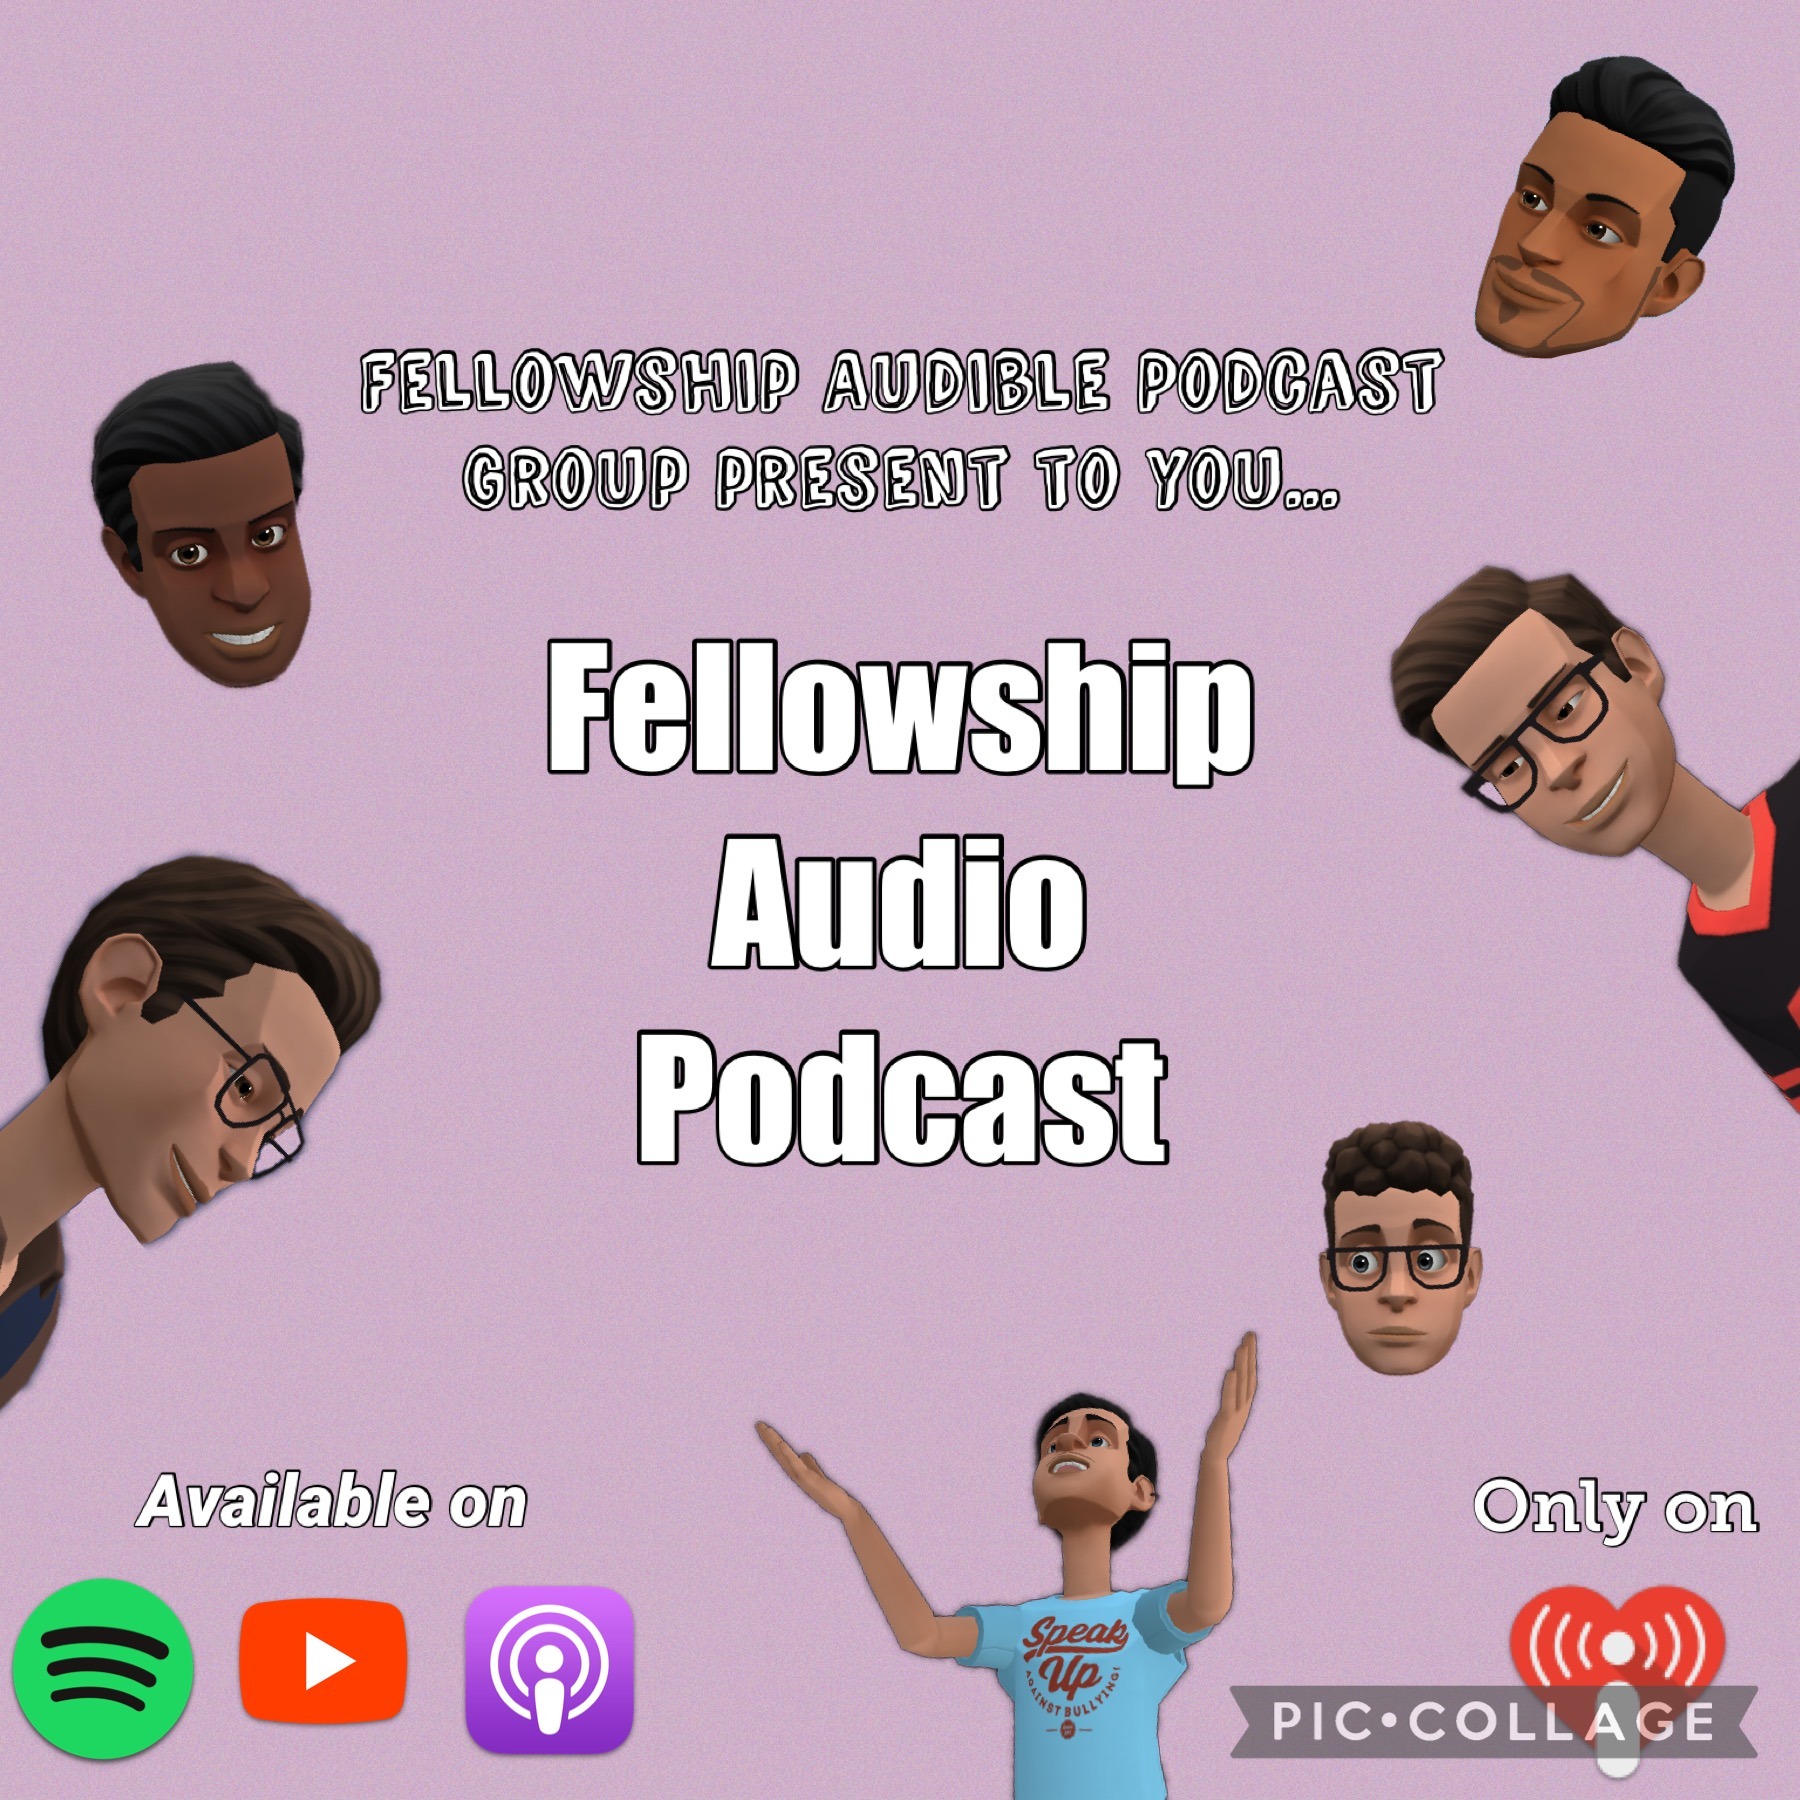 Return to glory | Fellowship Audio Podcast